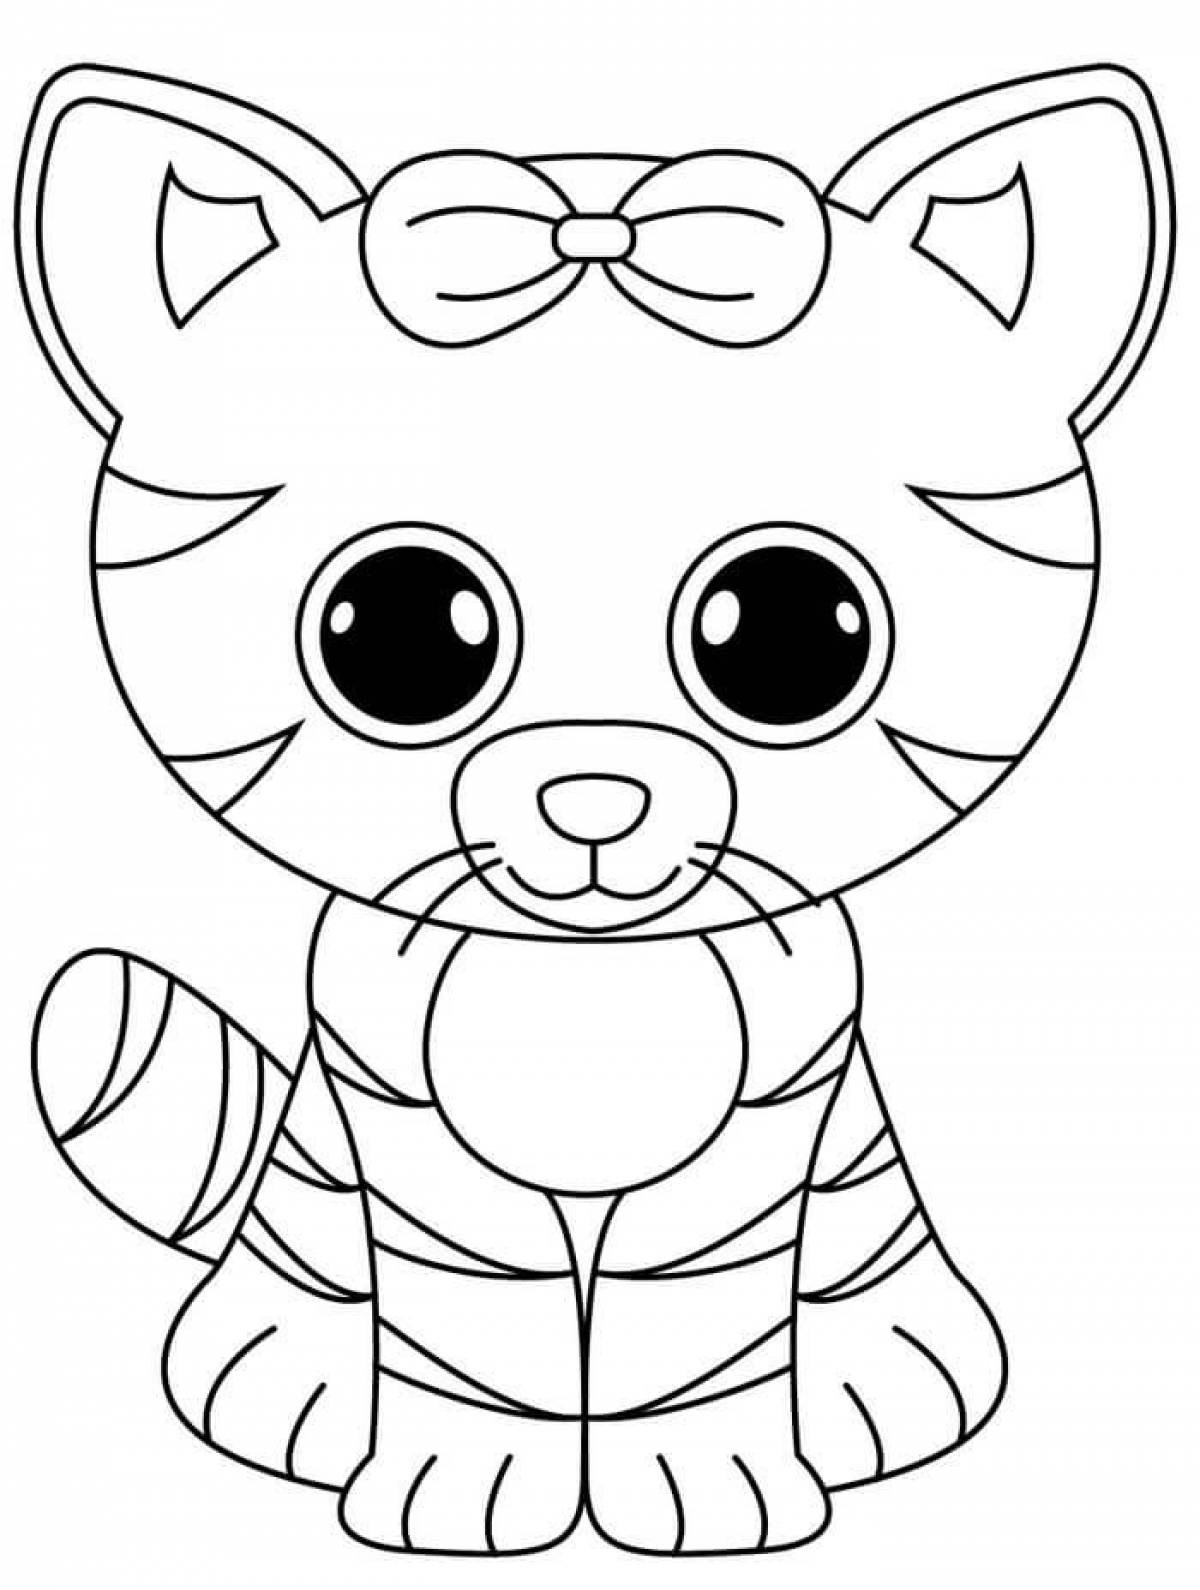 Cute tiger cub coloring page